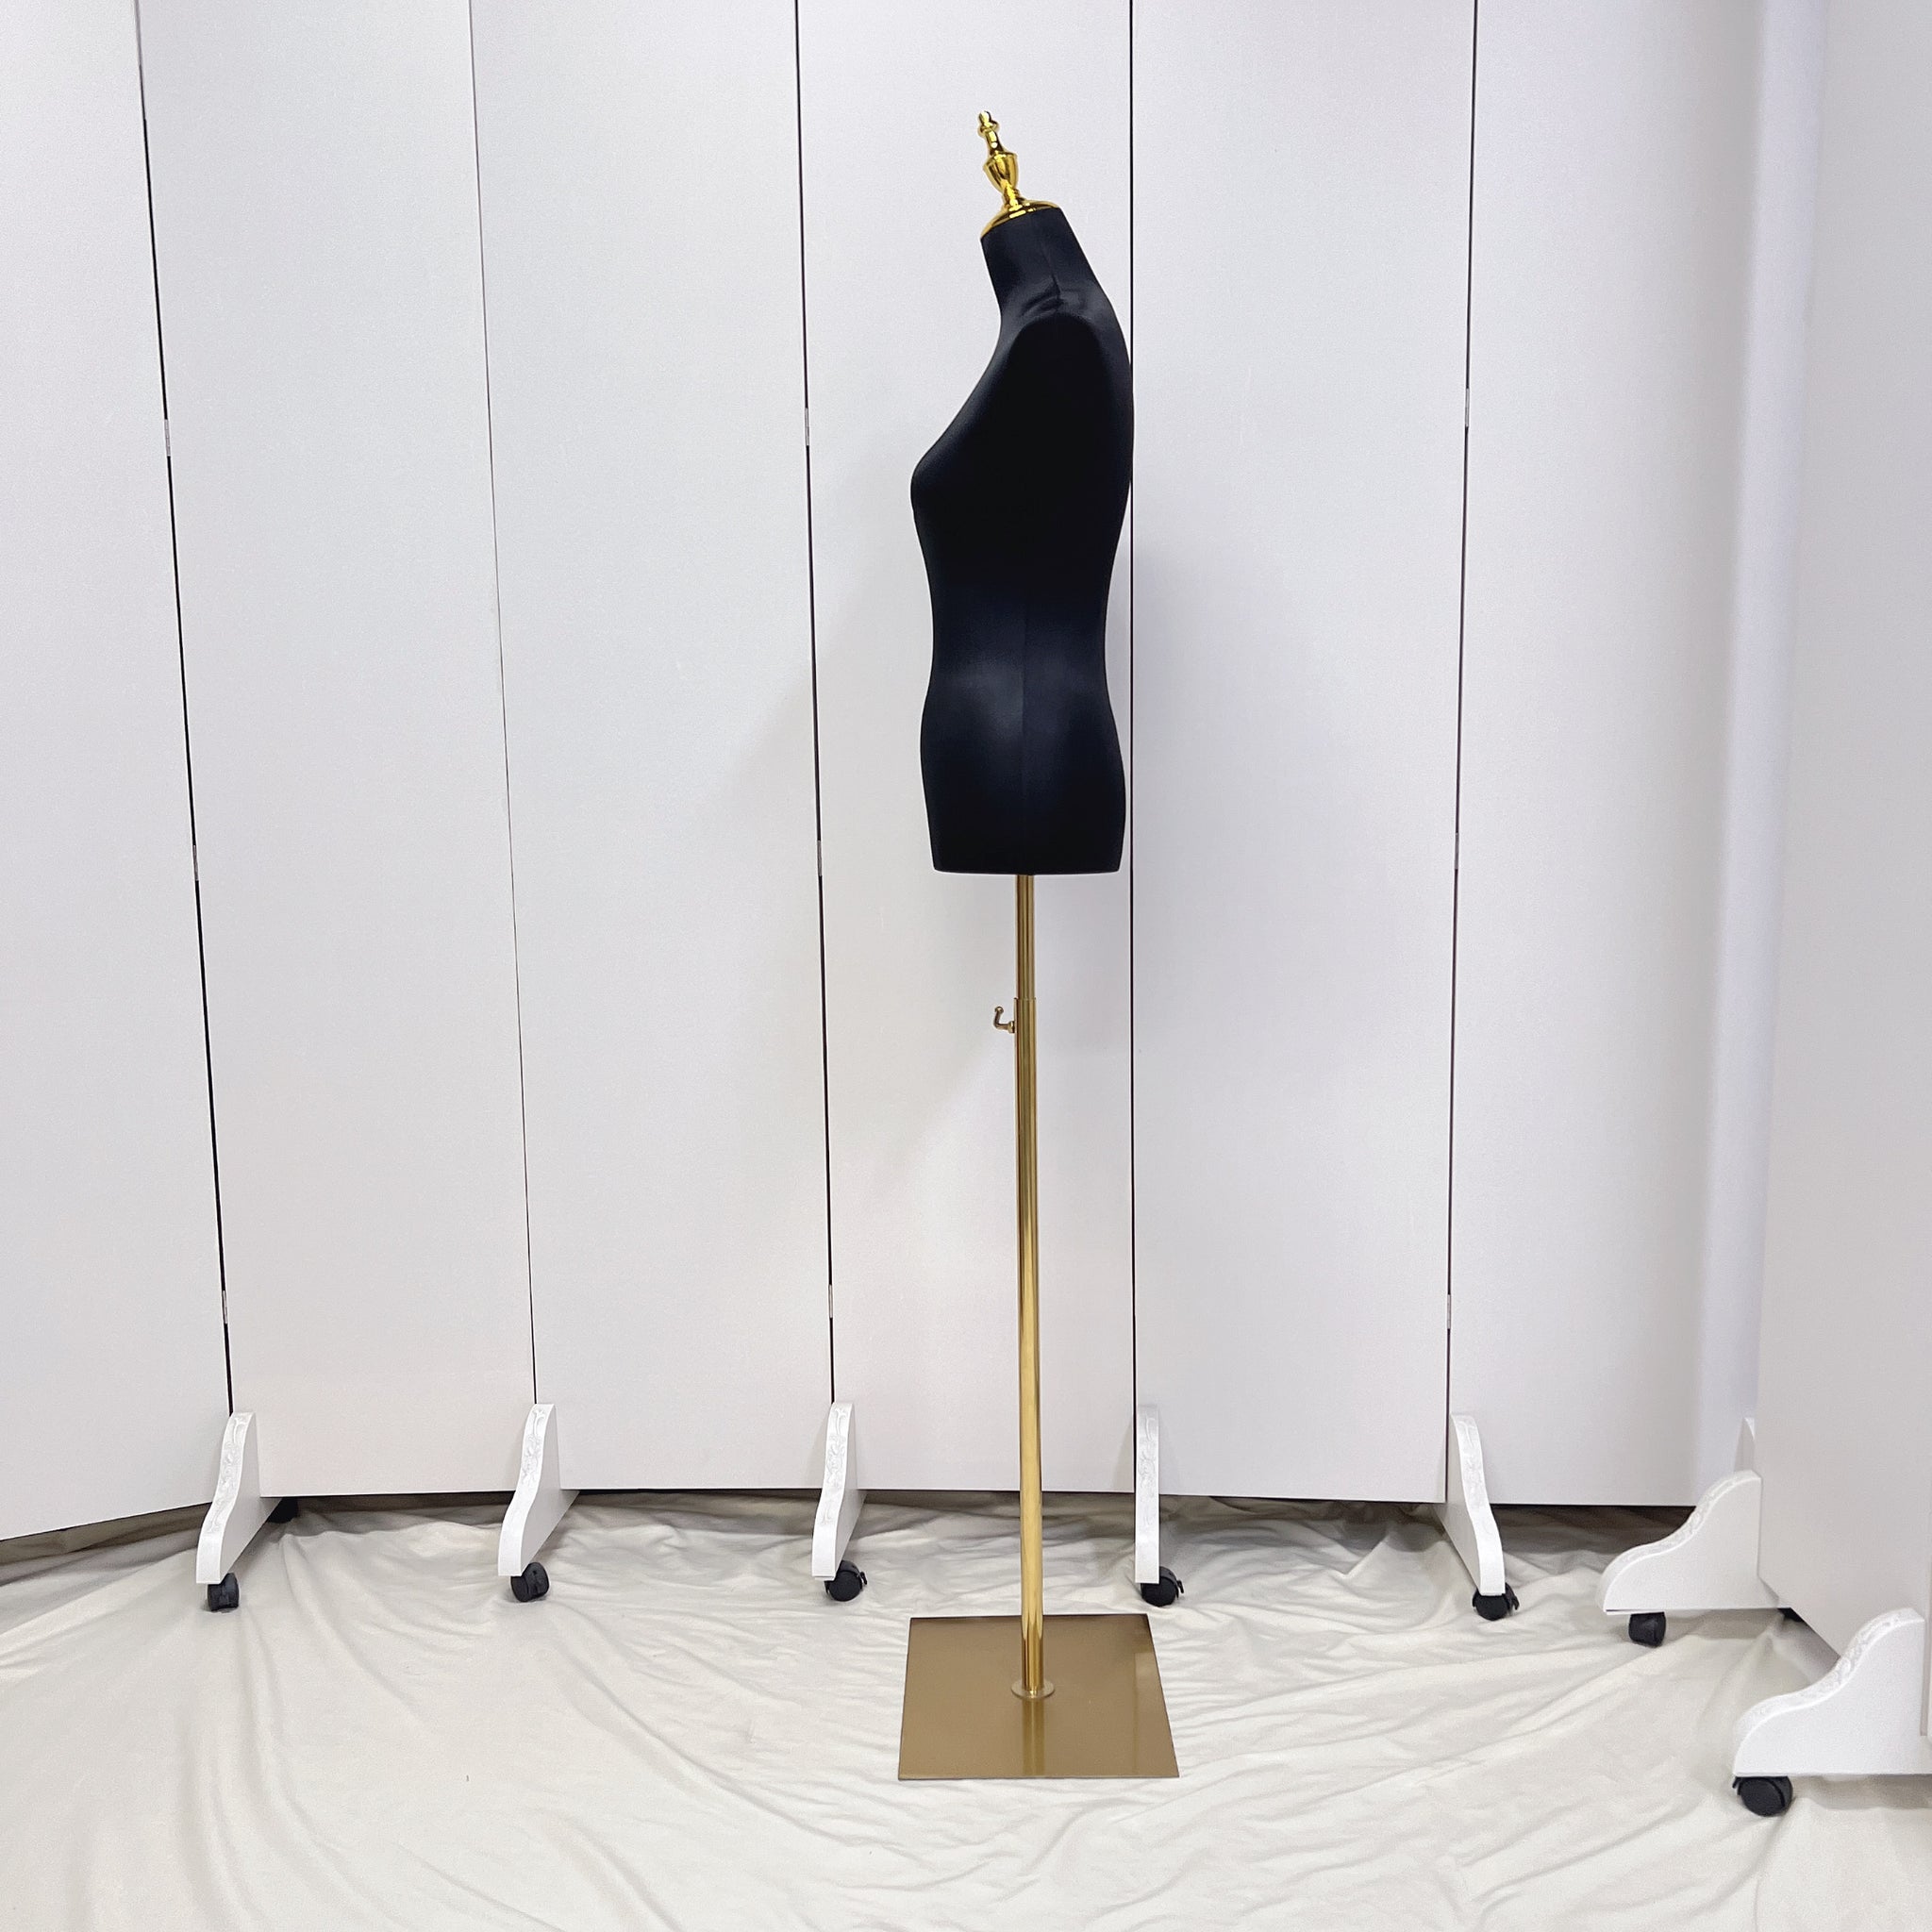 Half Body Female Display Dress Form Mannequin,Black Linen